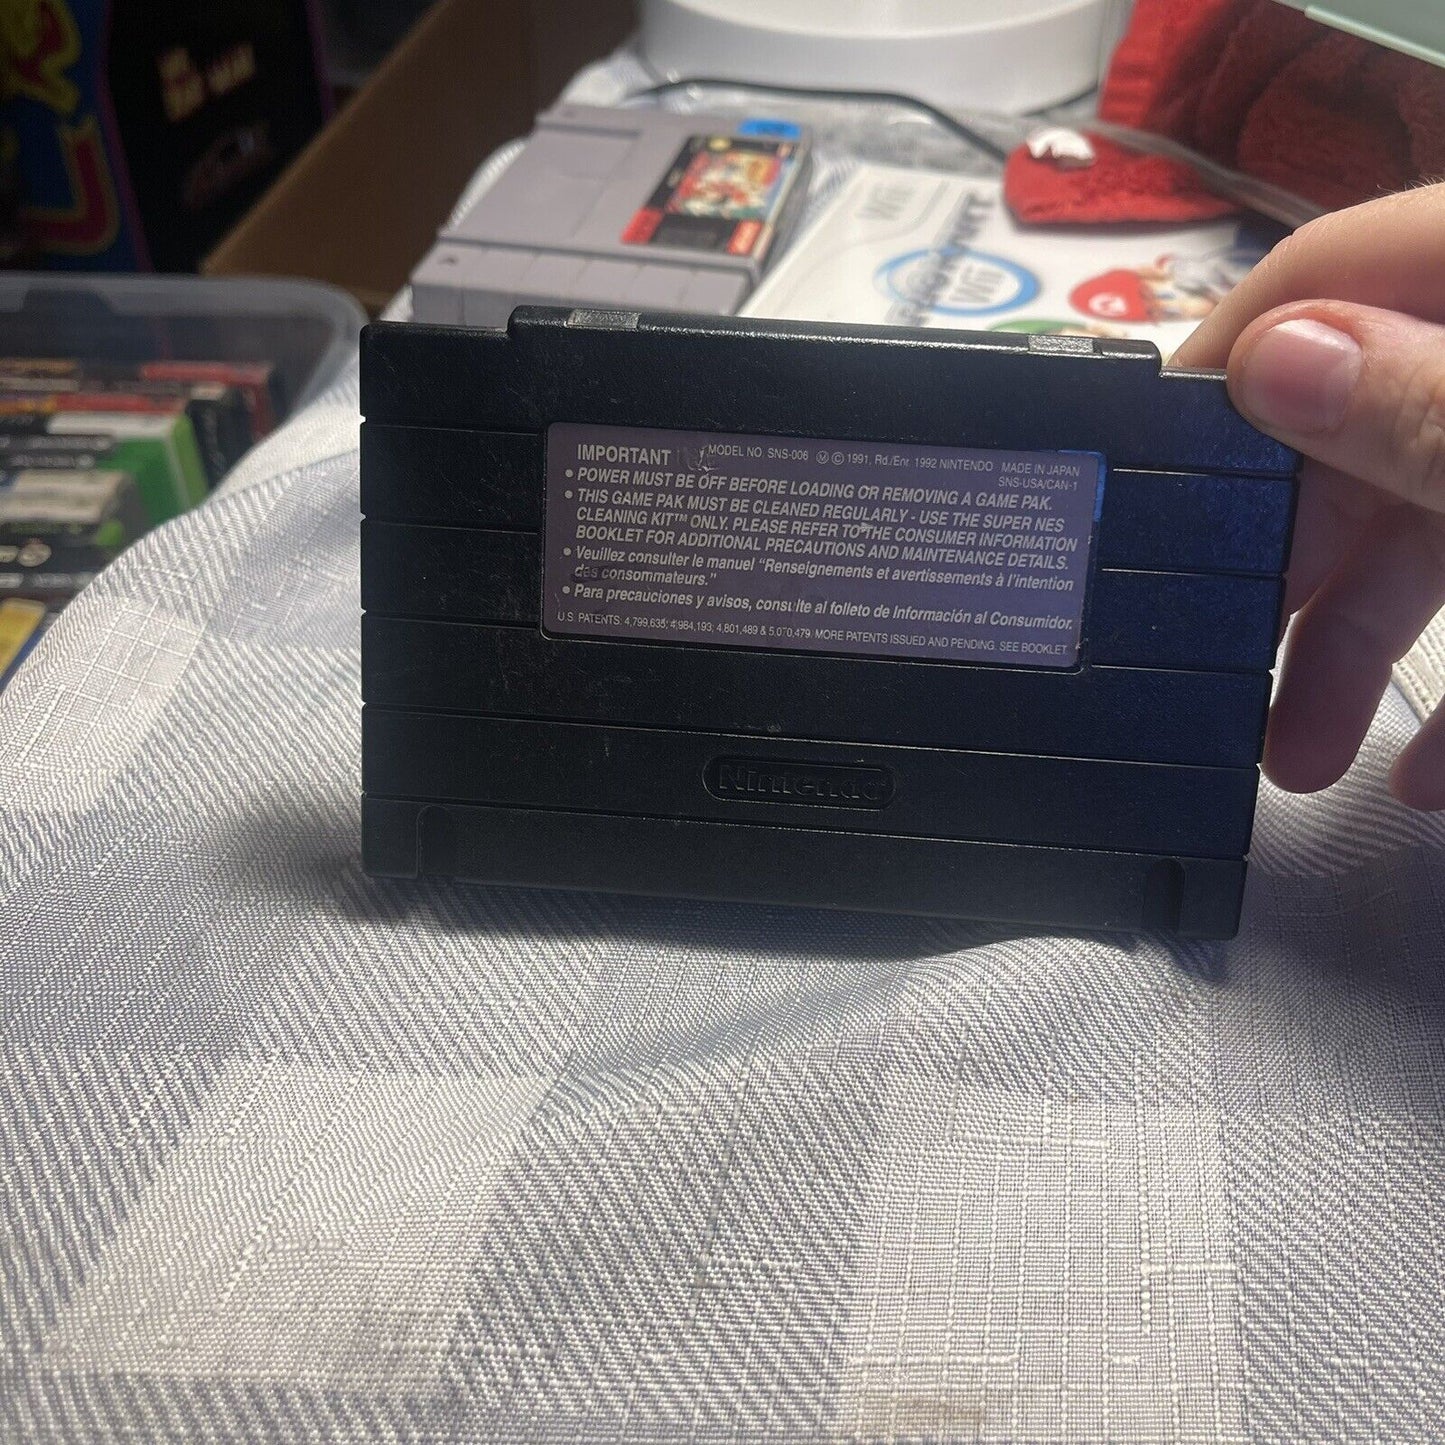 Killer Instinct Authentic Super Nintendo (SNES) Game Cartridge Tested